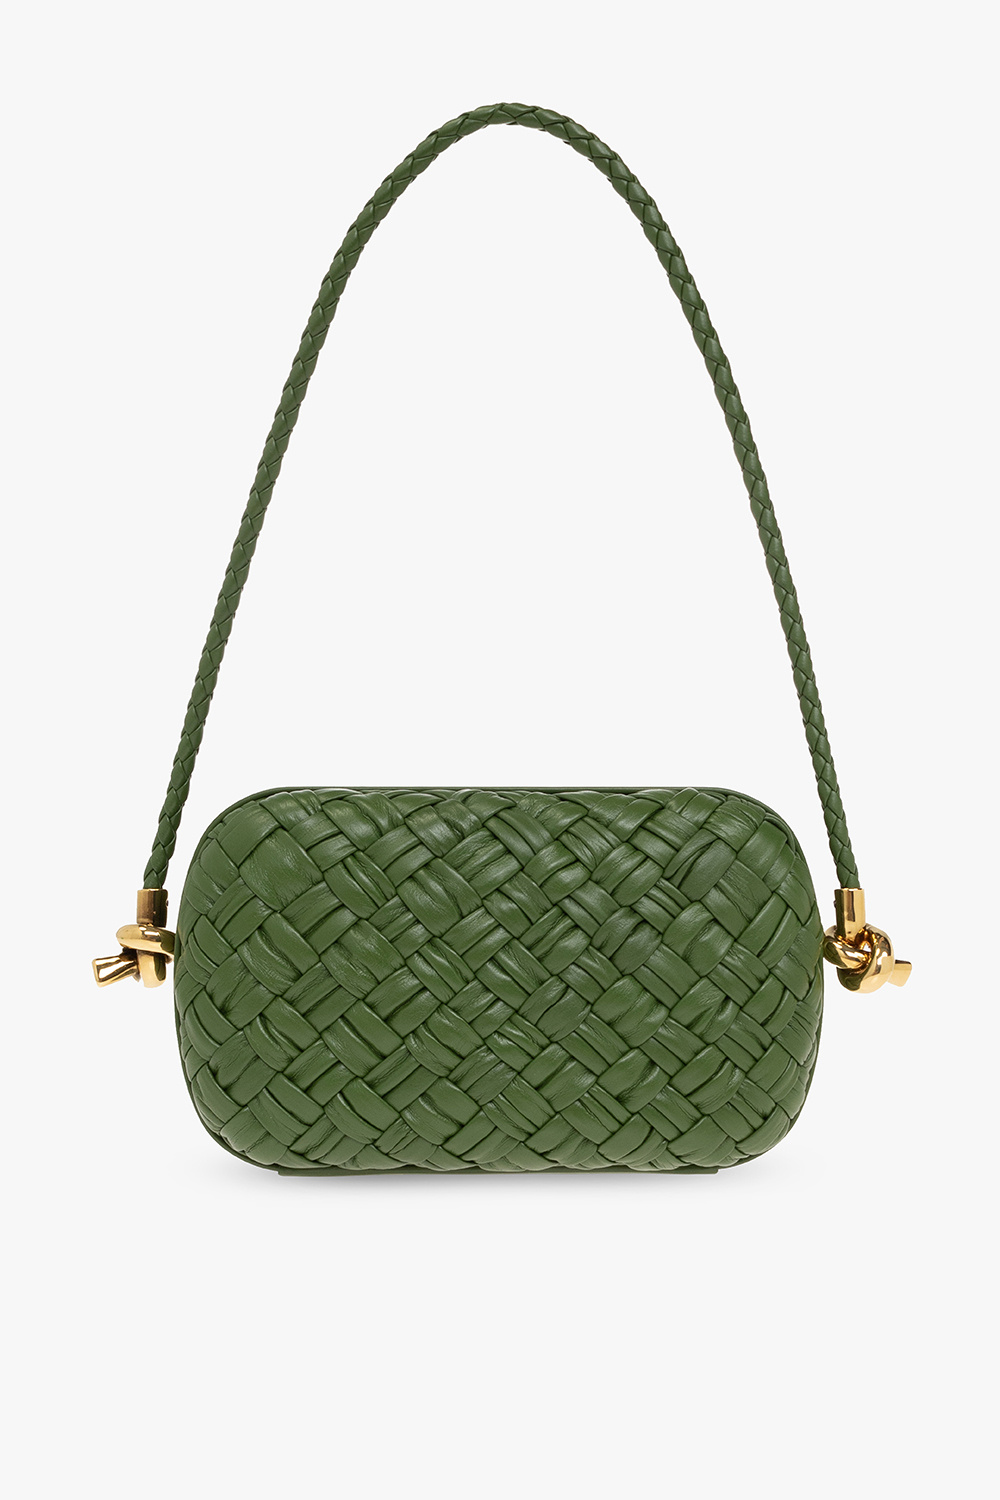 Bottega Veneta 'Knot Small' shoulder bag | StclaircomoShops